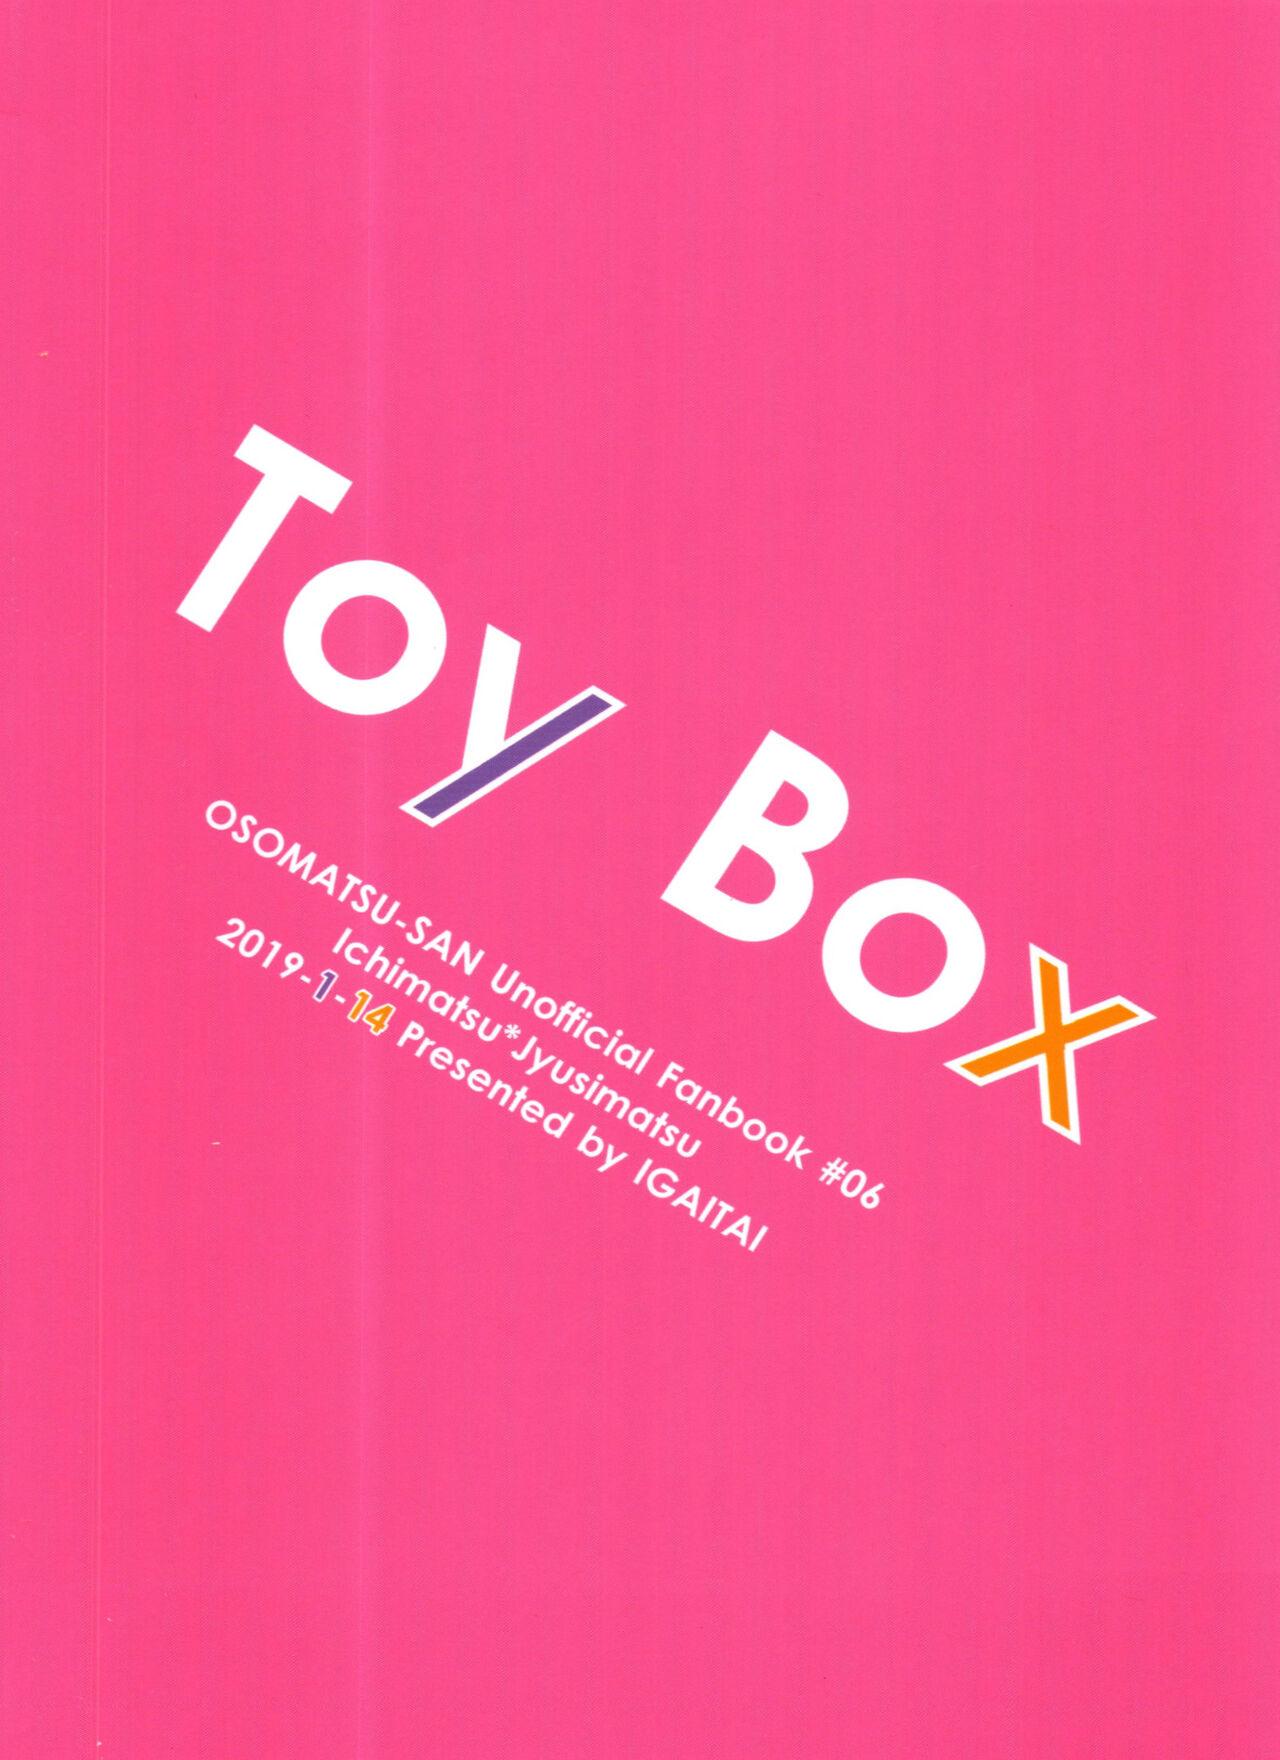 Toy Box 71